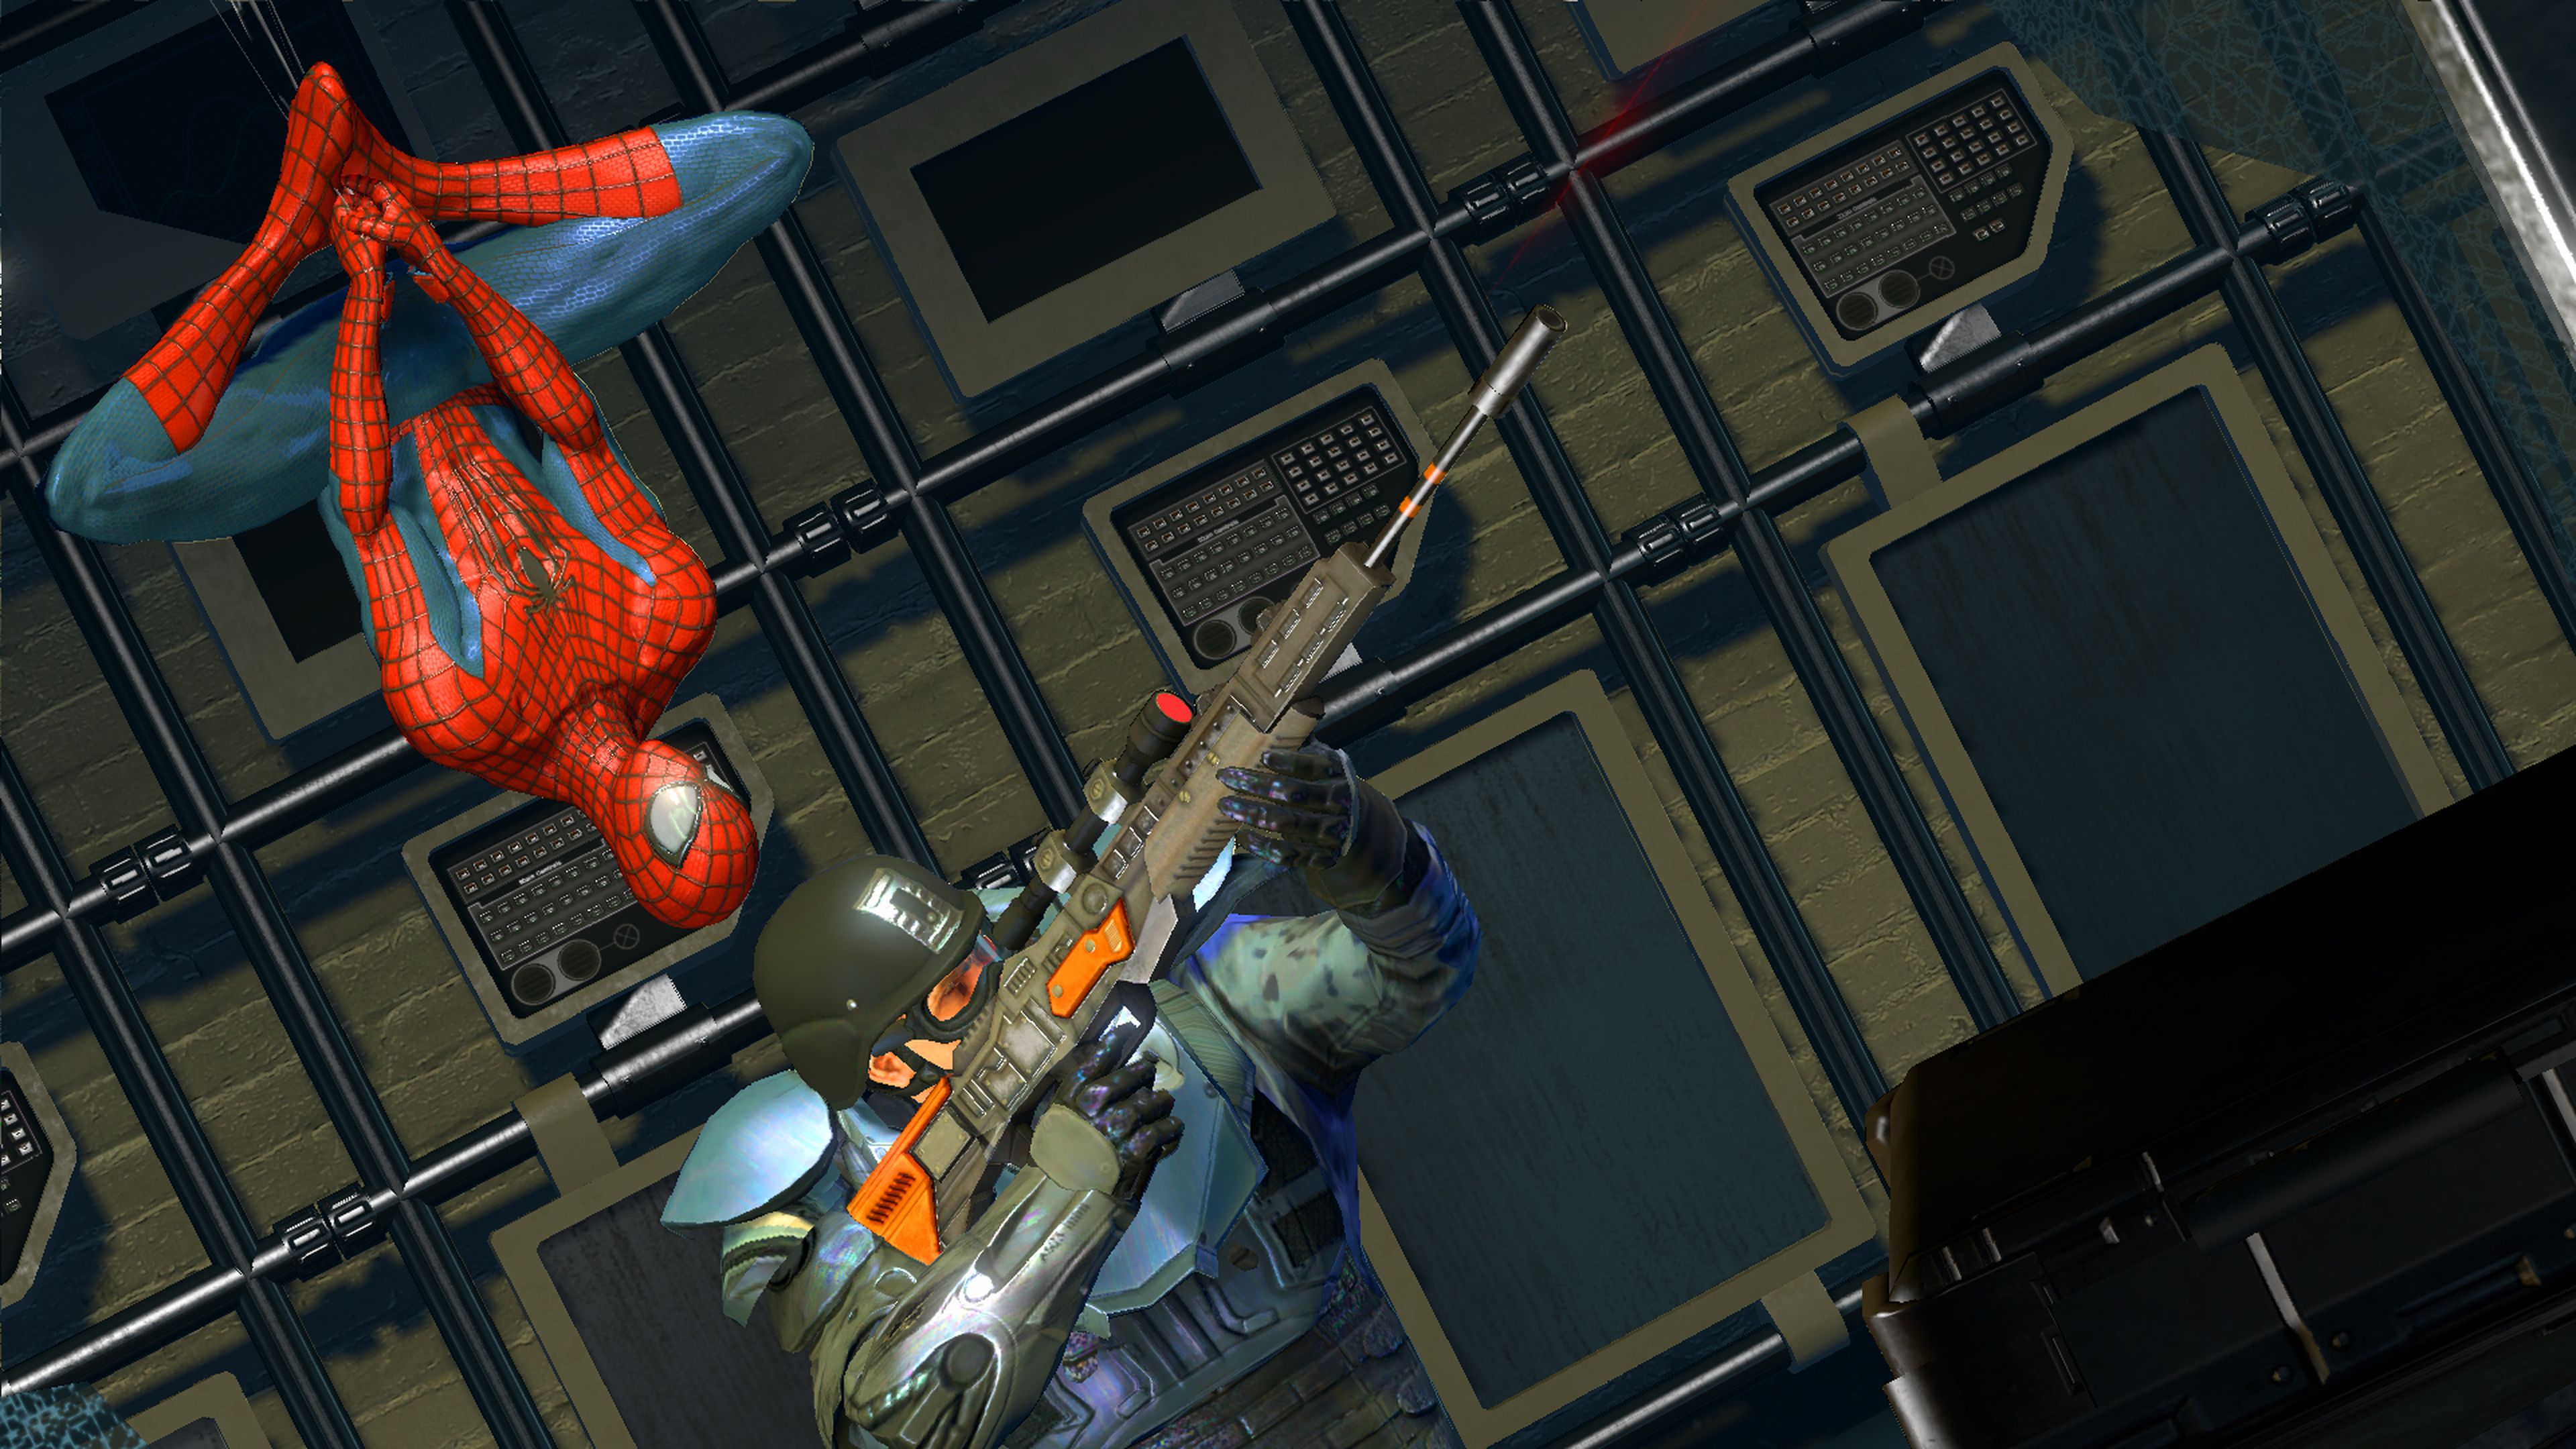 В2 спайдер. The amazing Spider-man (игра, 2012). The amazing Spider-man 2 (игра, 2014). Человек паук Амейзинг 2. Spider man 2014 игра.